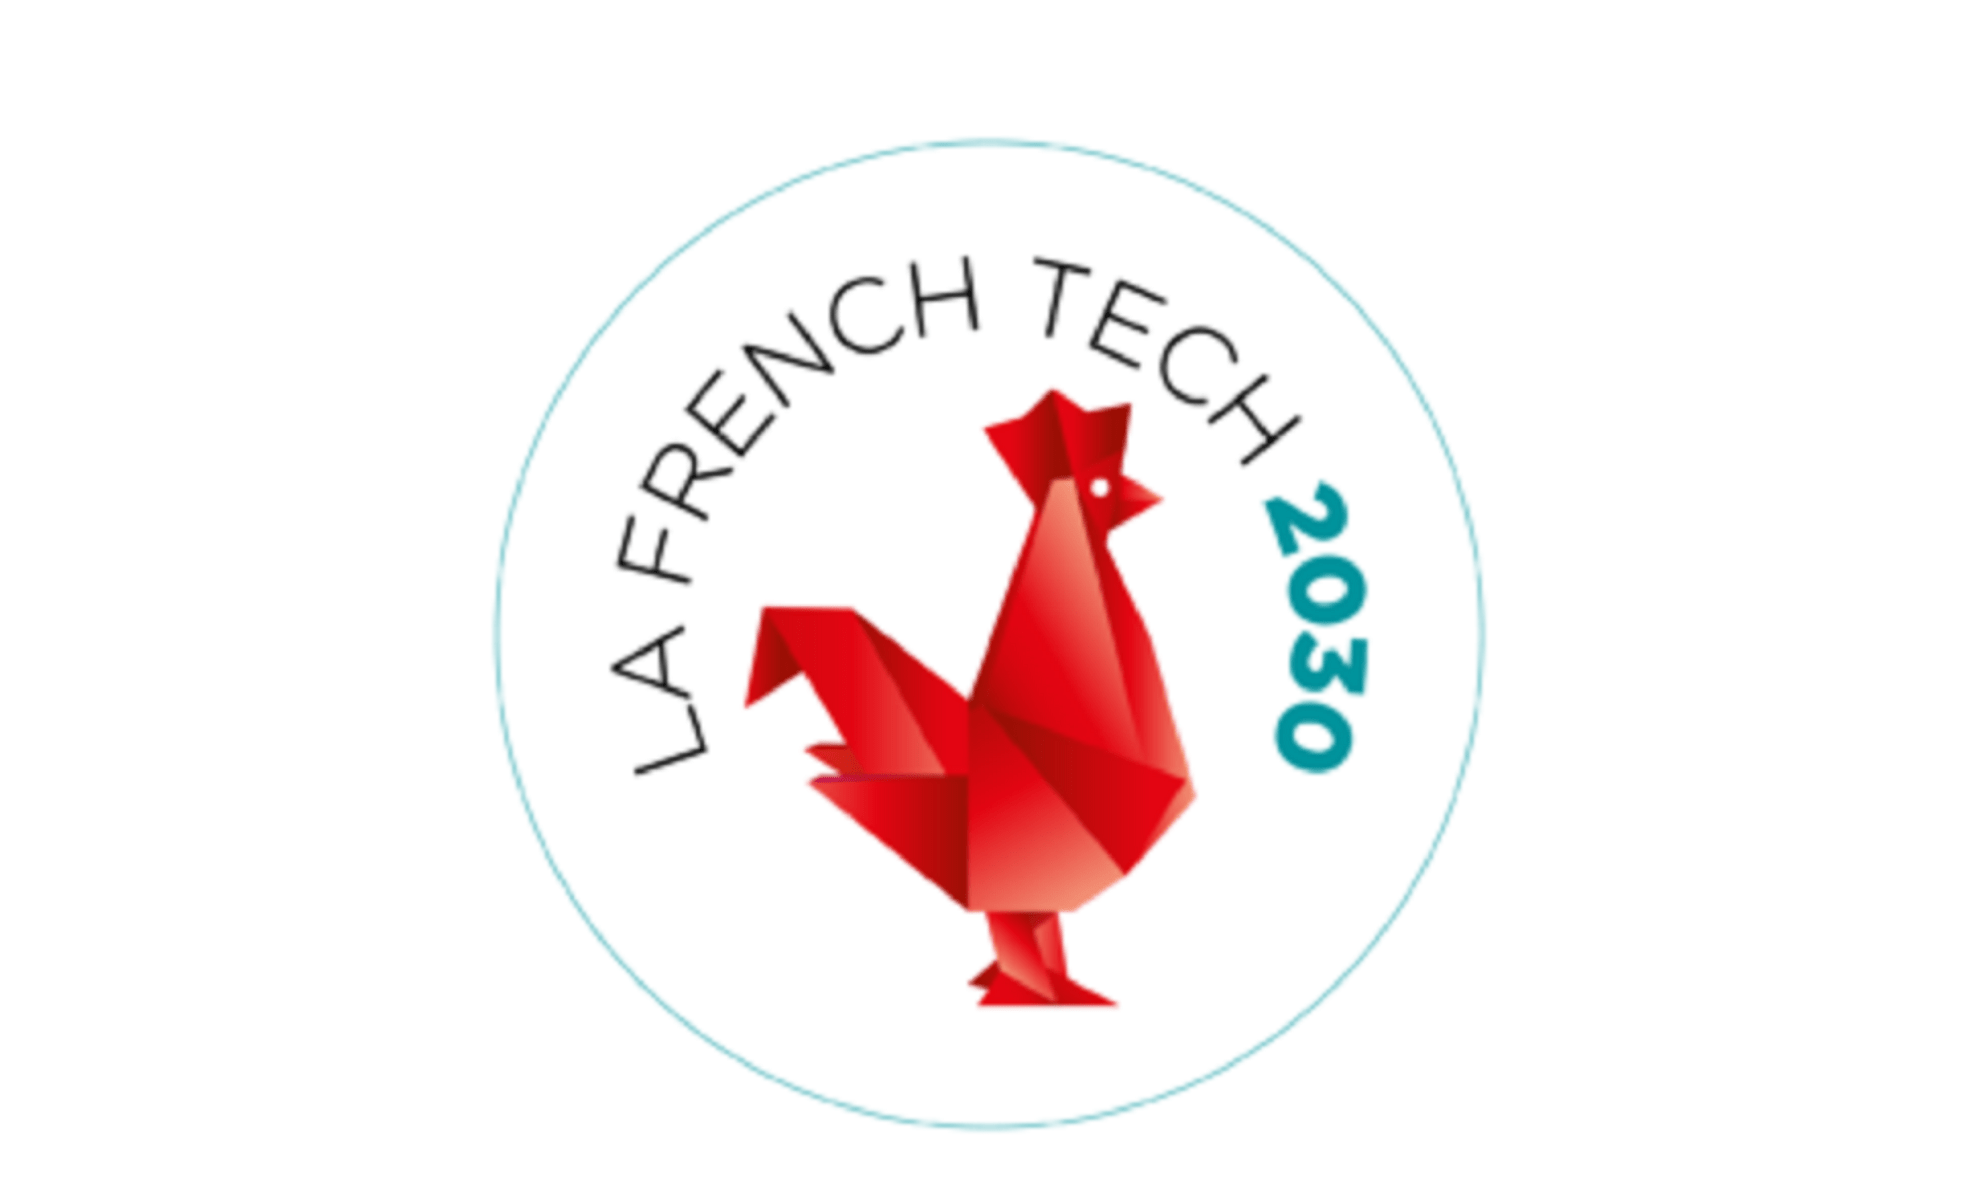 French tech 2030